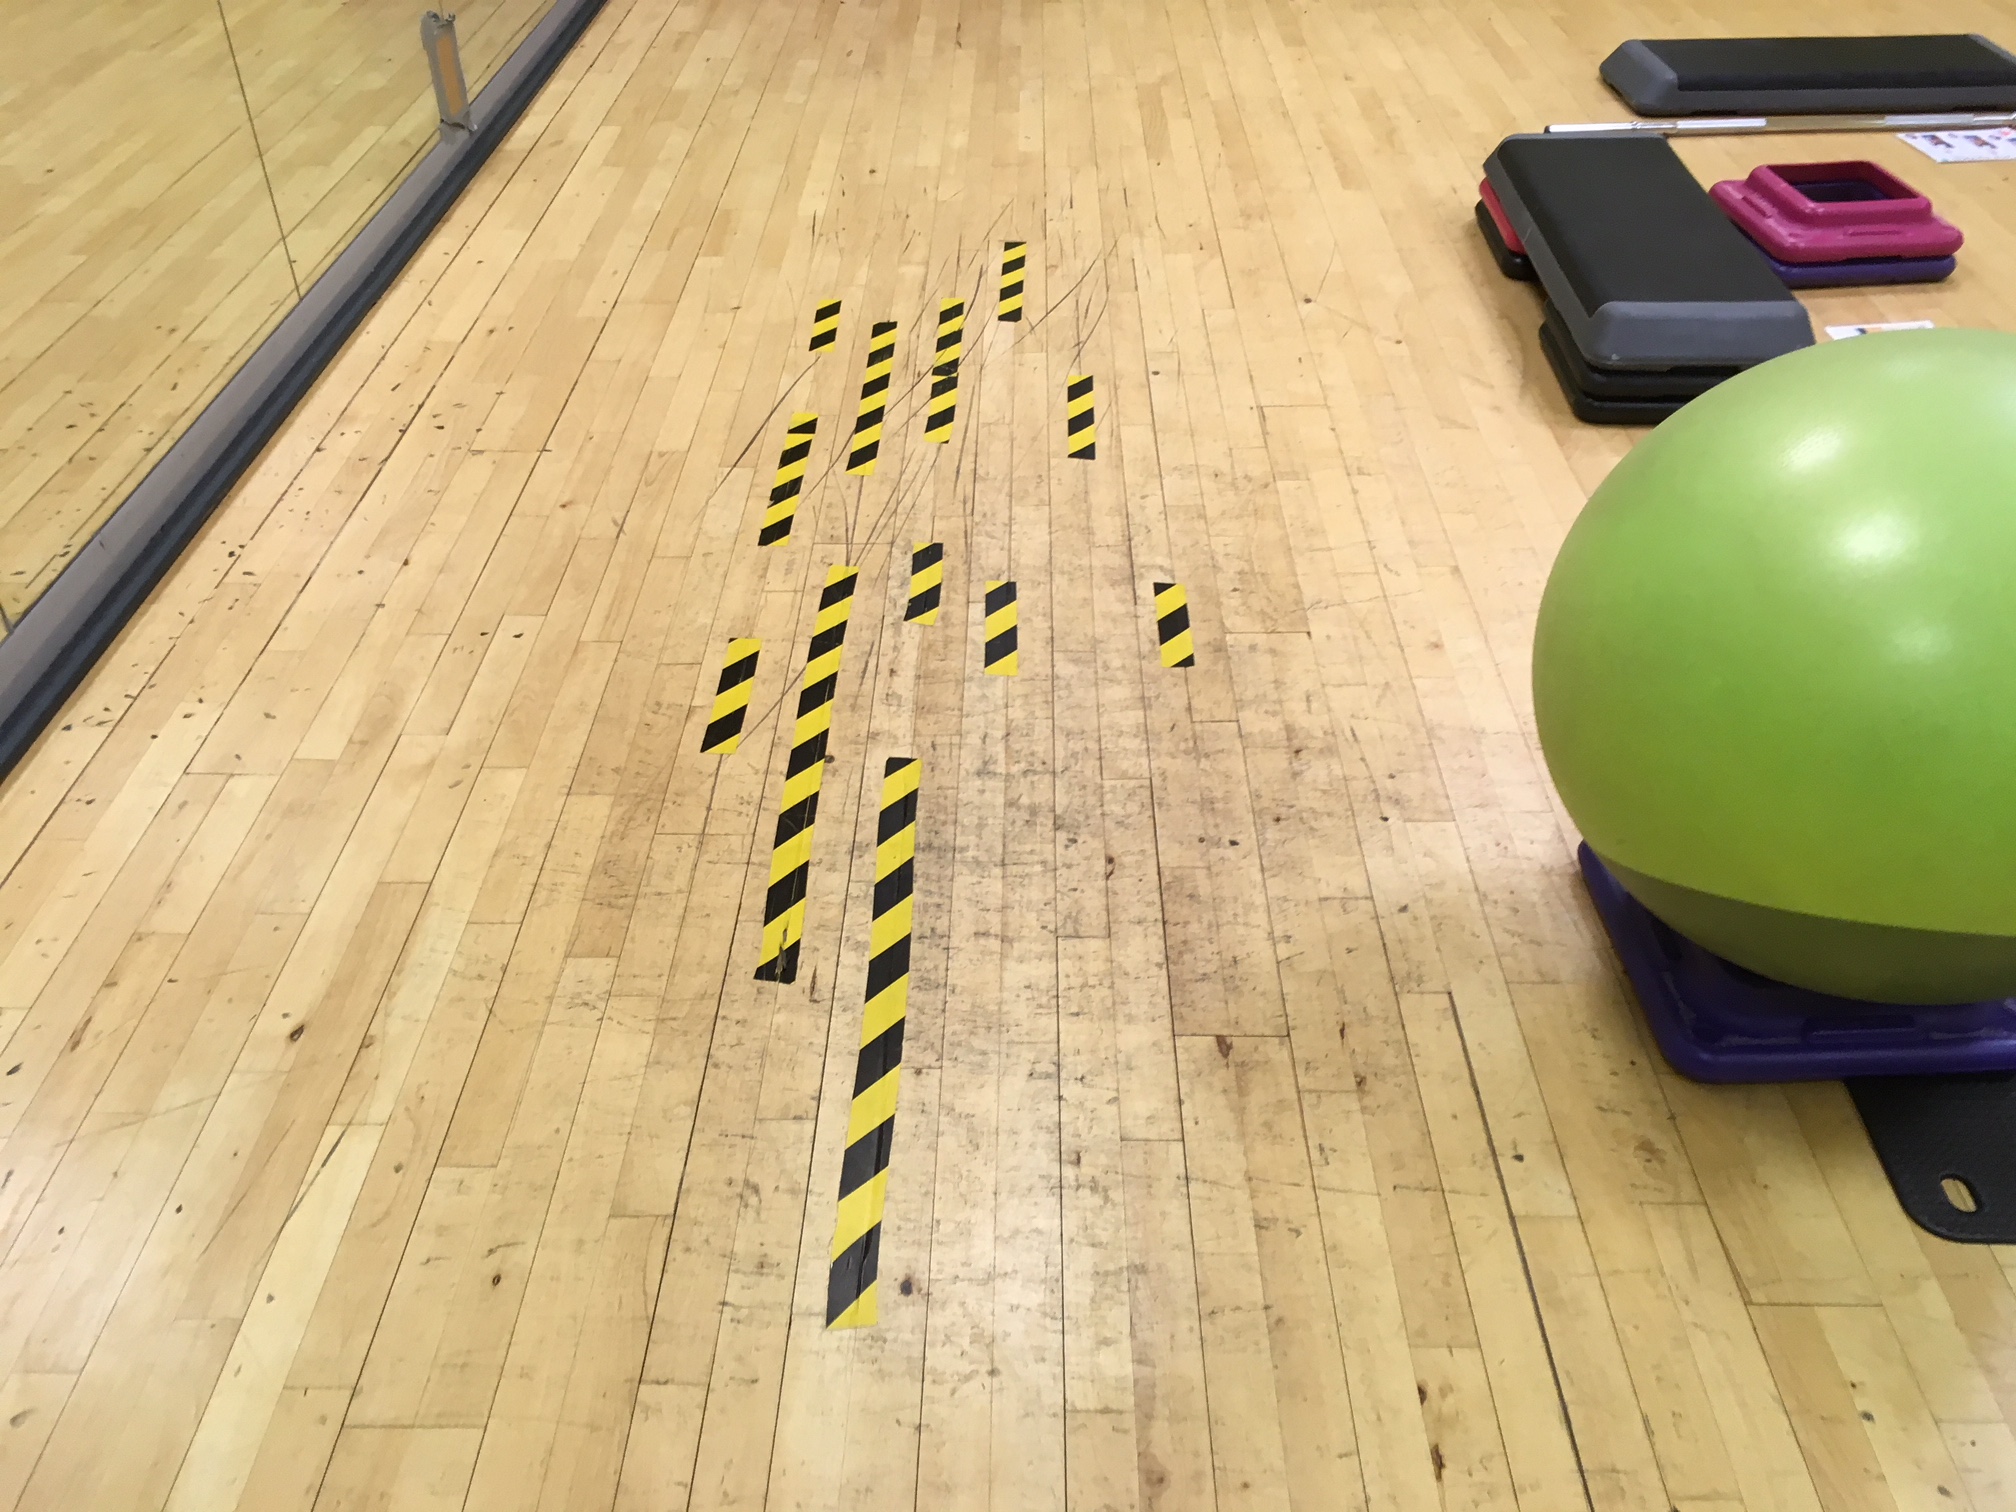 Leisure centre fitness studio floor before pulastic refurbishment by Sport Surfaces UK